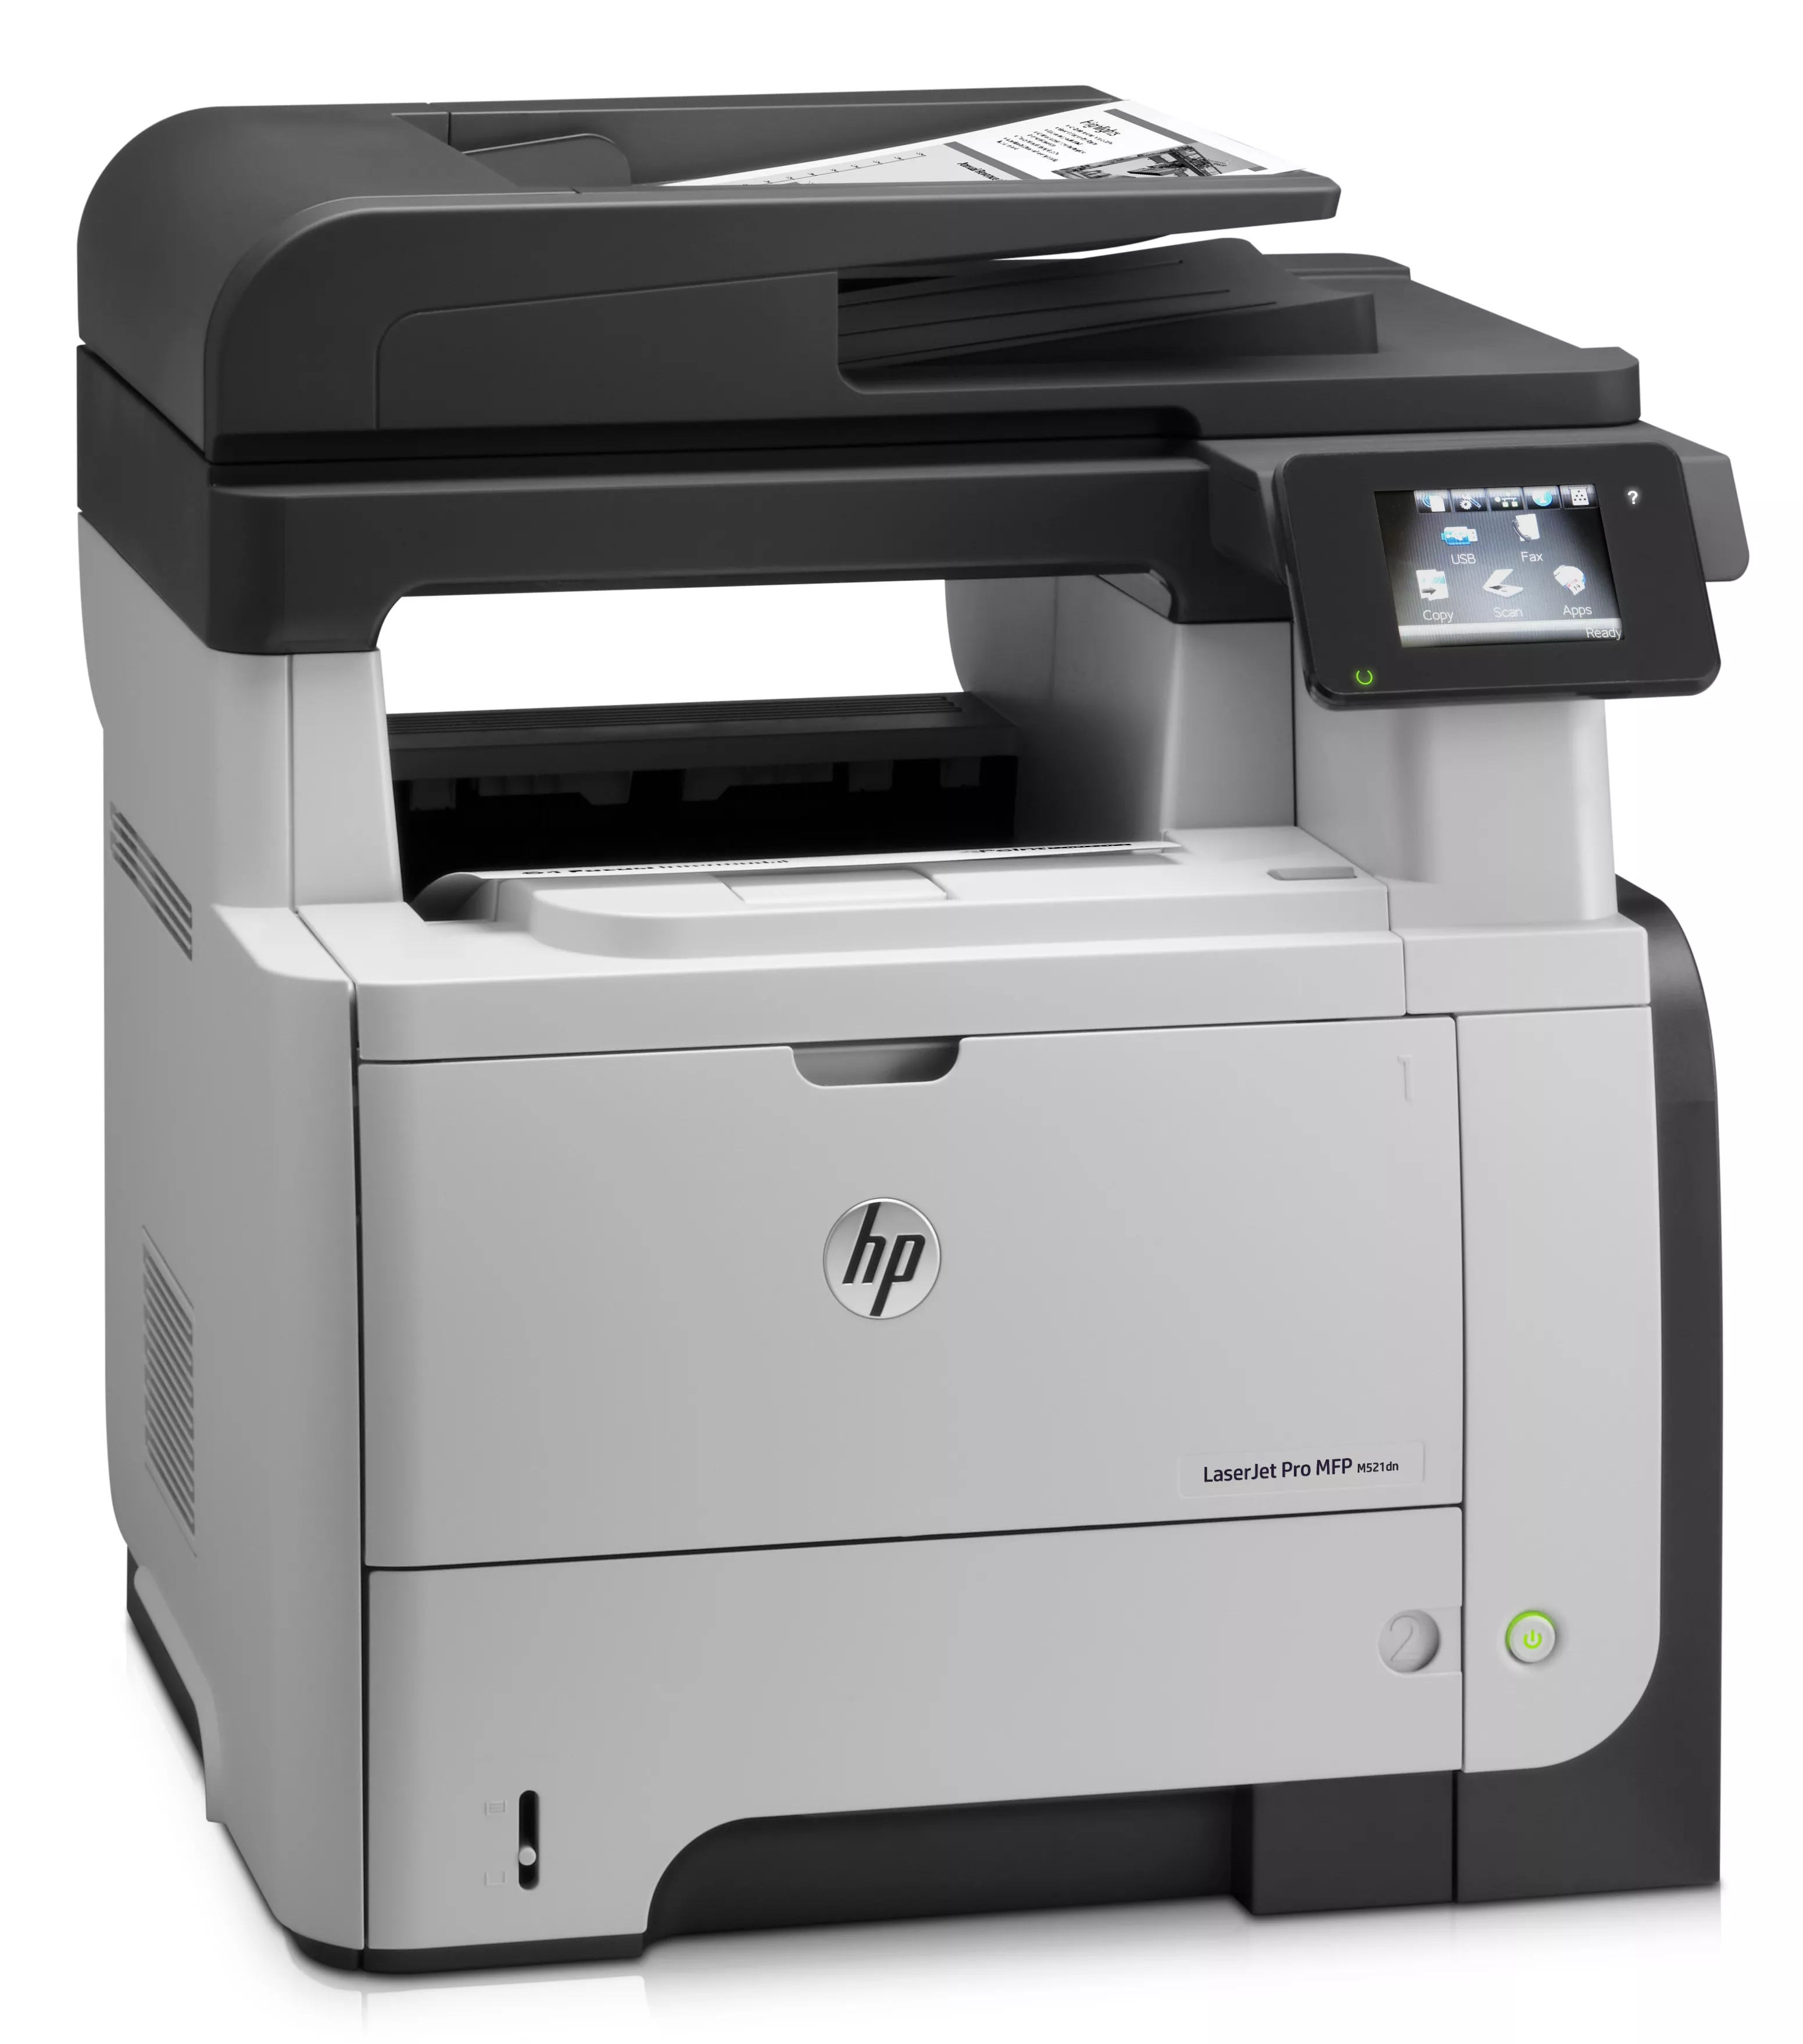 Imprimante multifonction HP LaserJet Enterprise M528dn